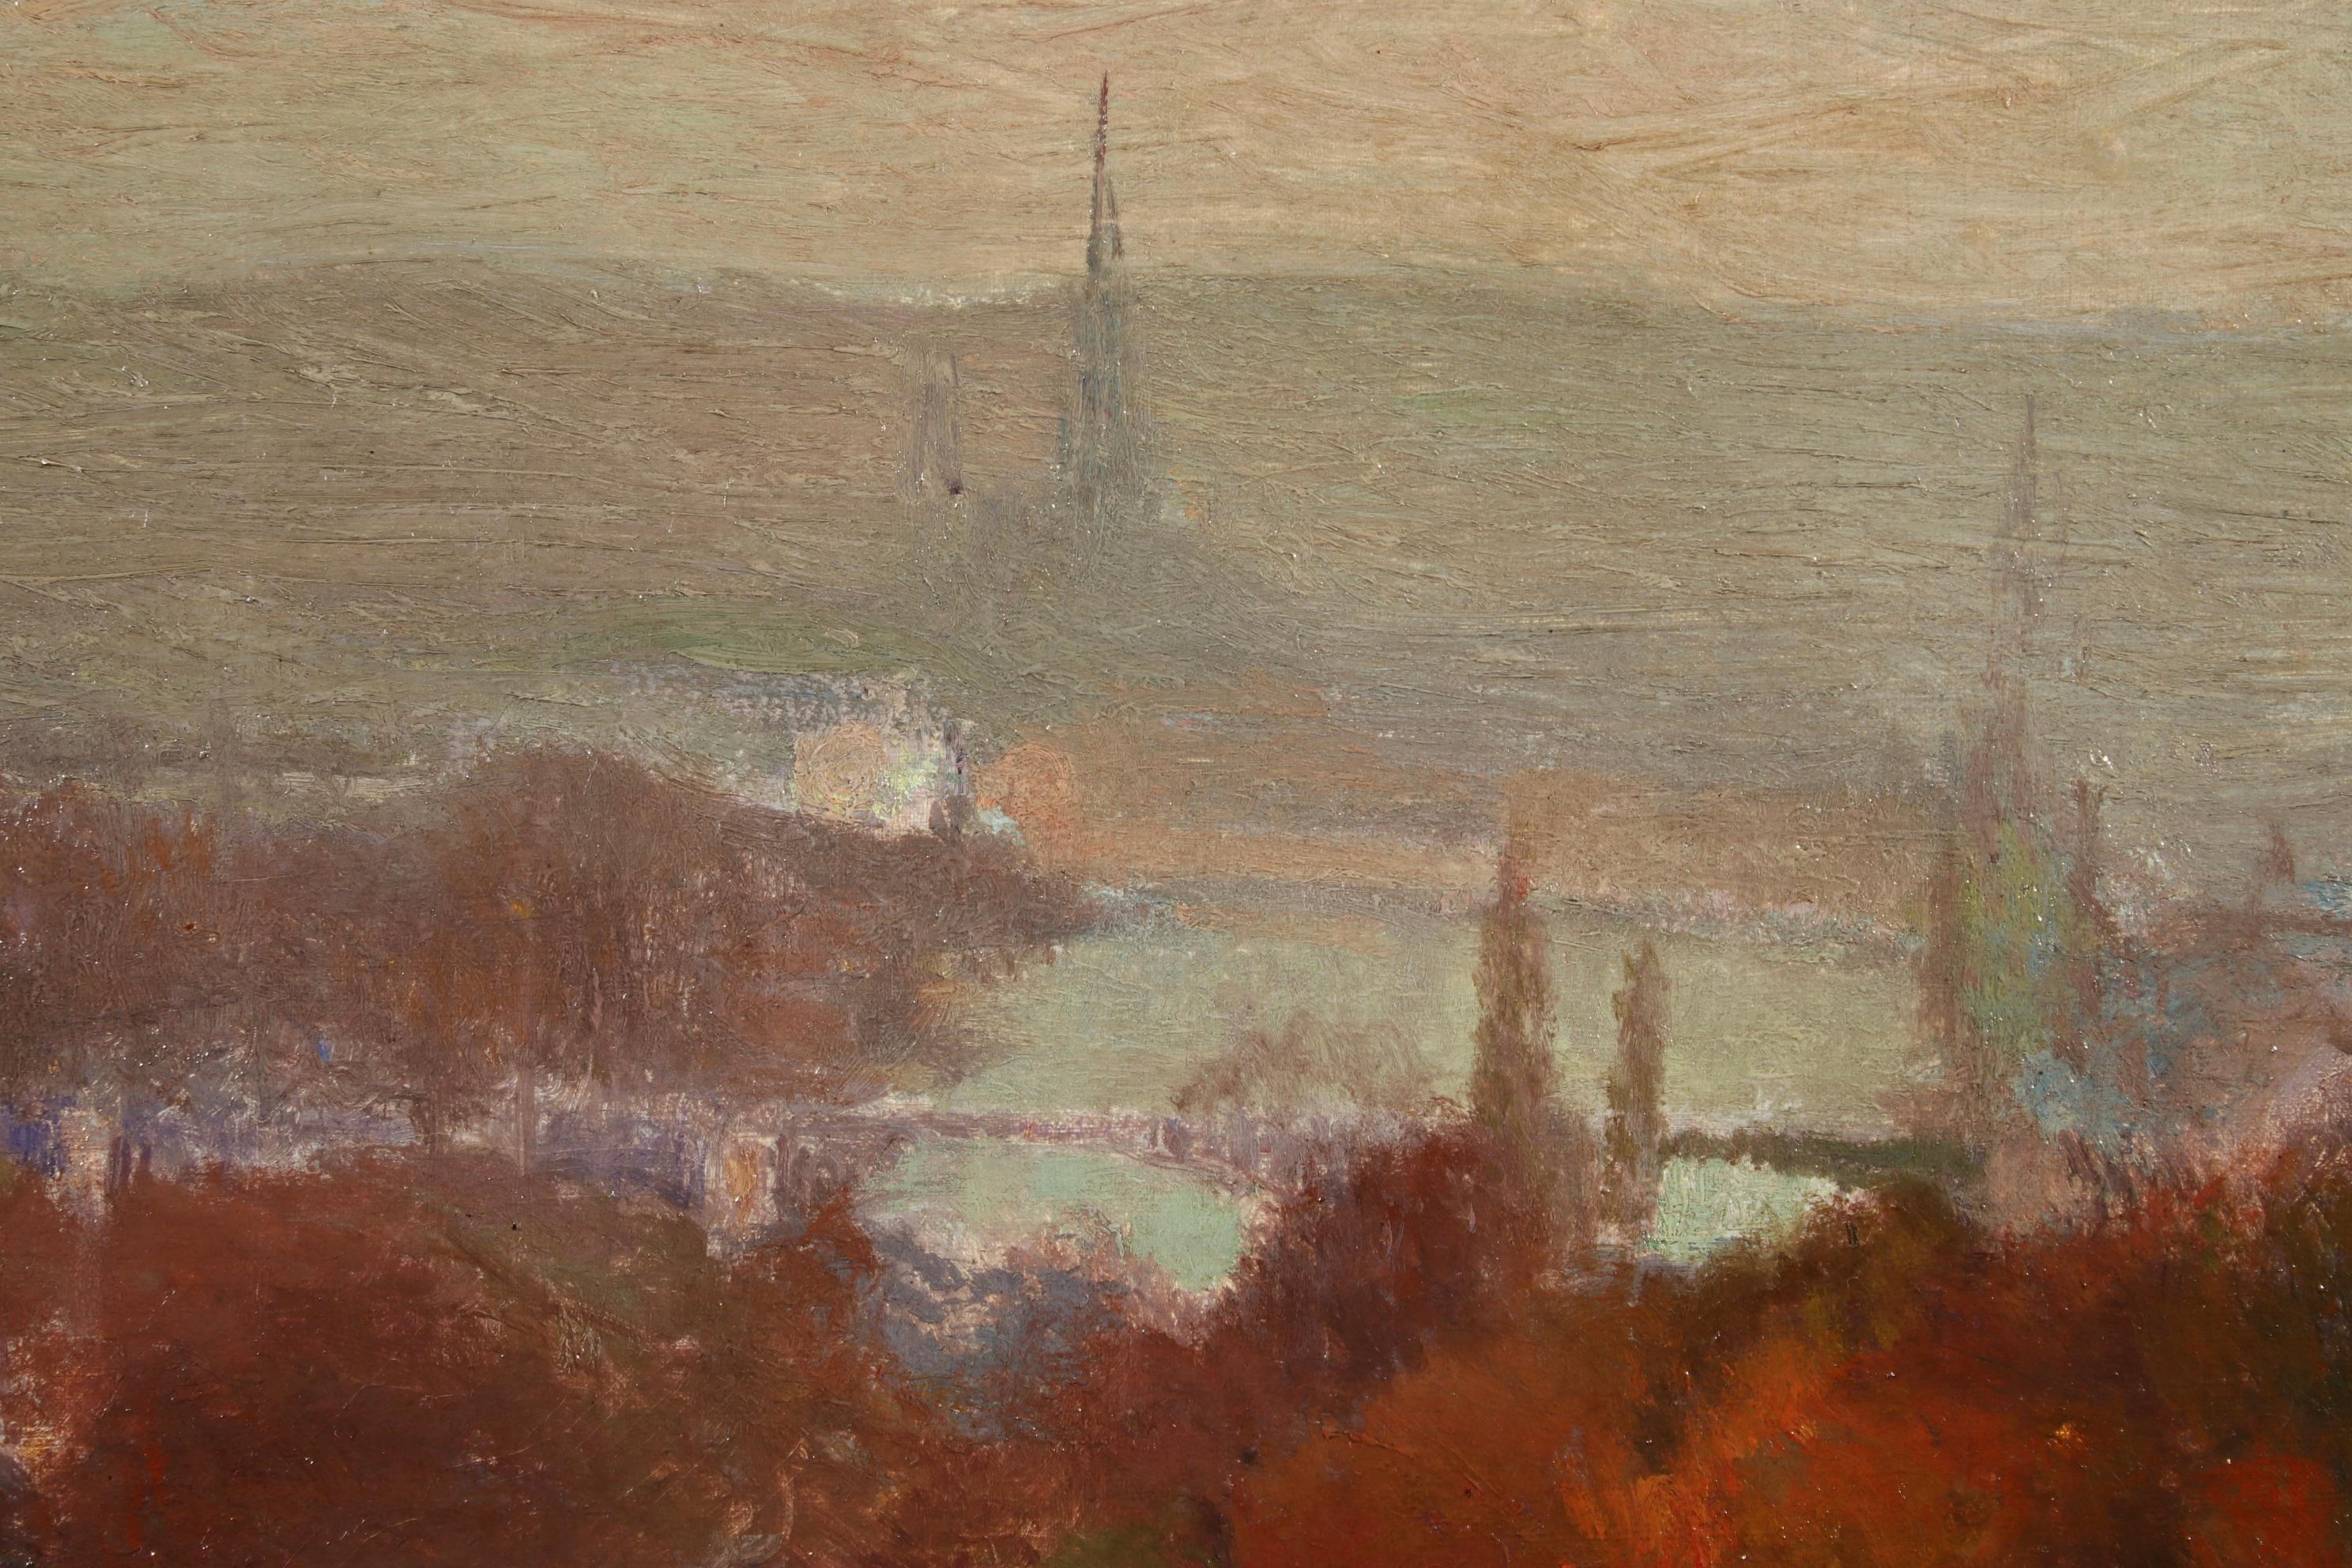 Morning Fog - Rouen - Impressionist Oil, River in Landscape by Joseph Delattre 2